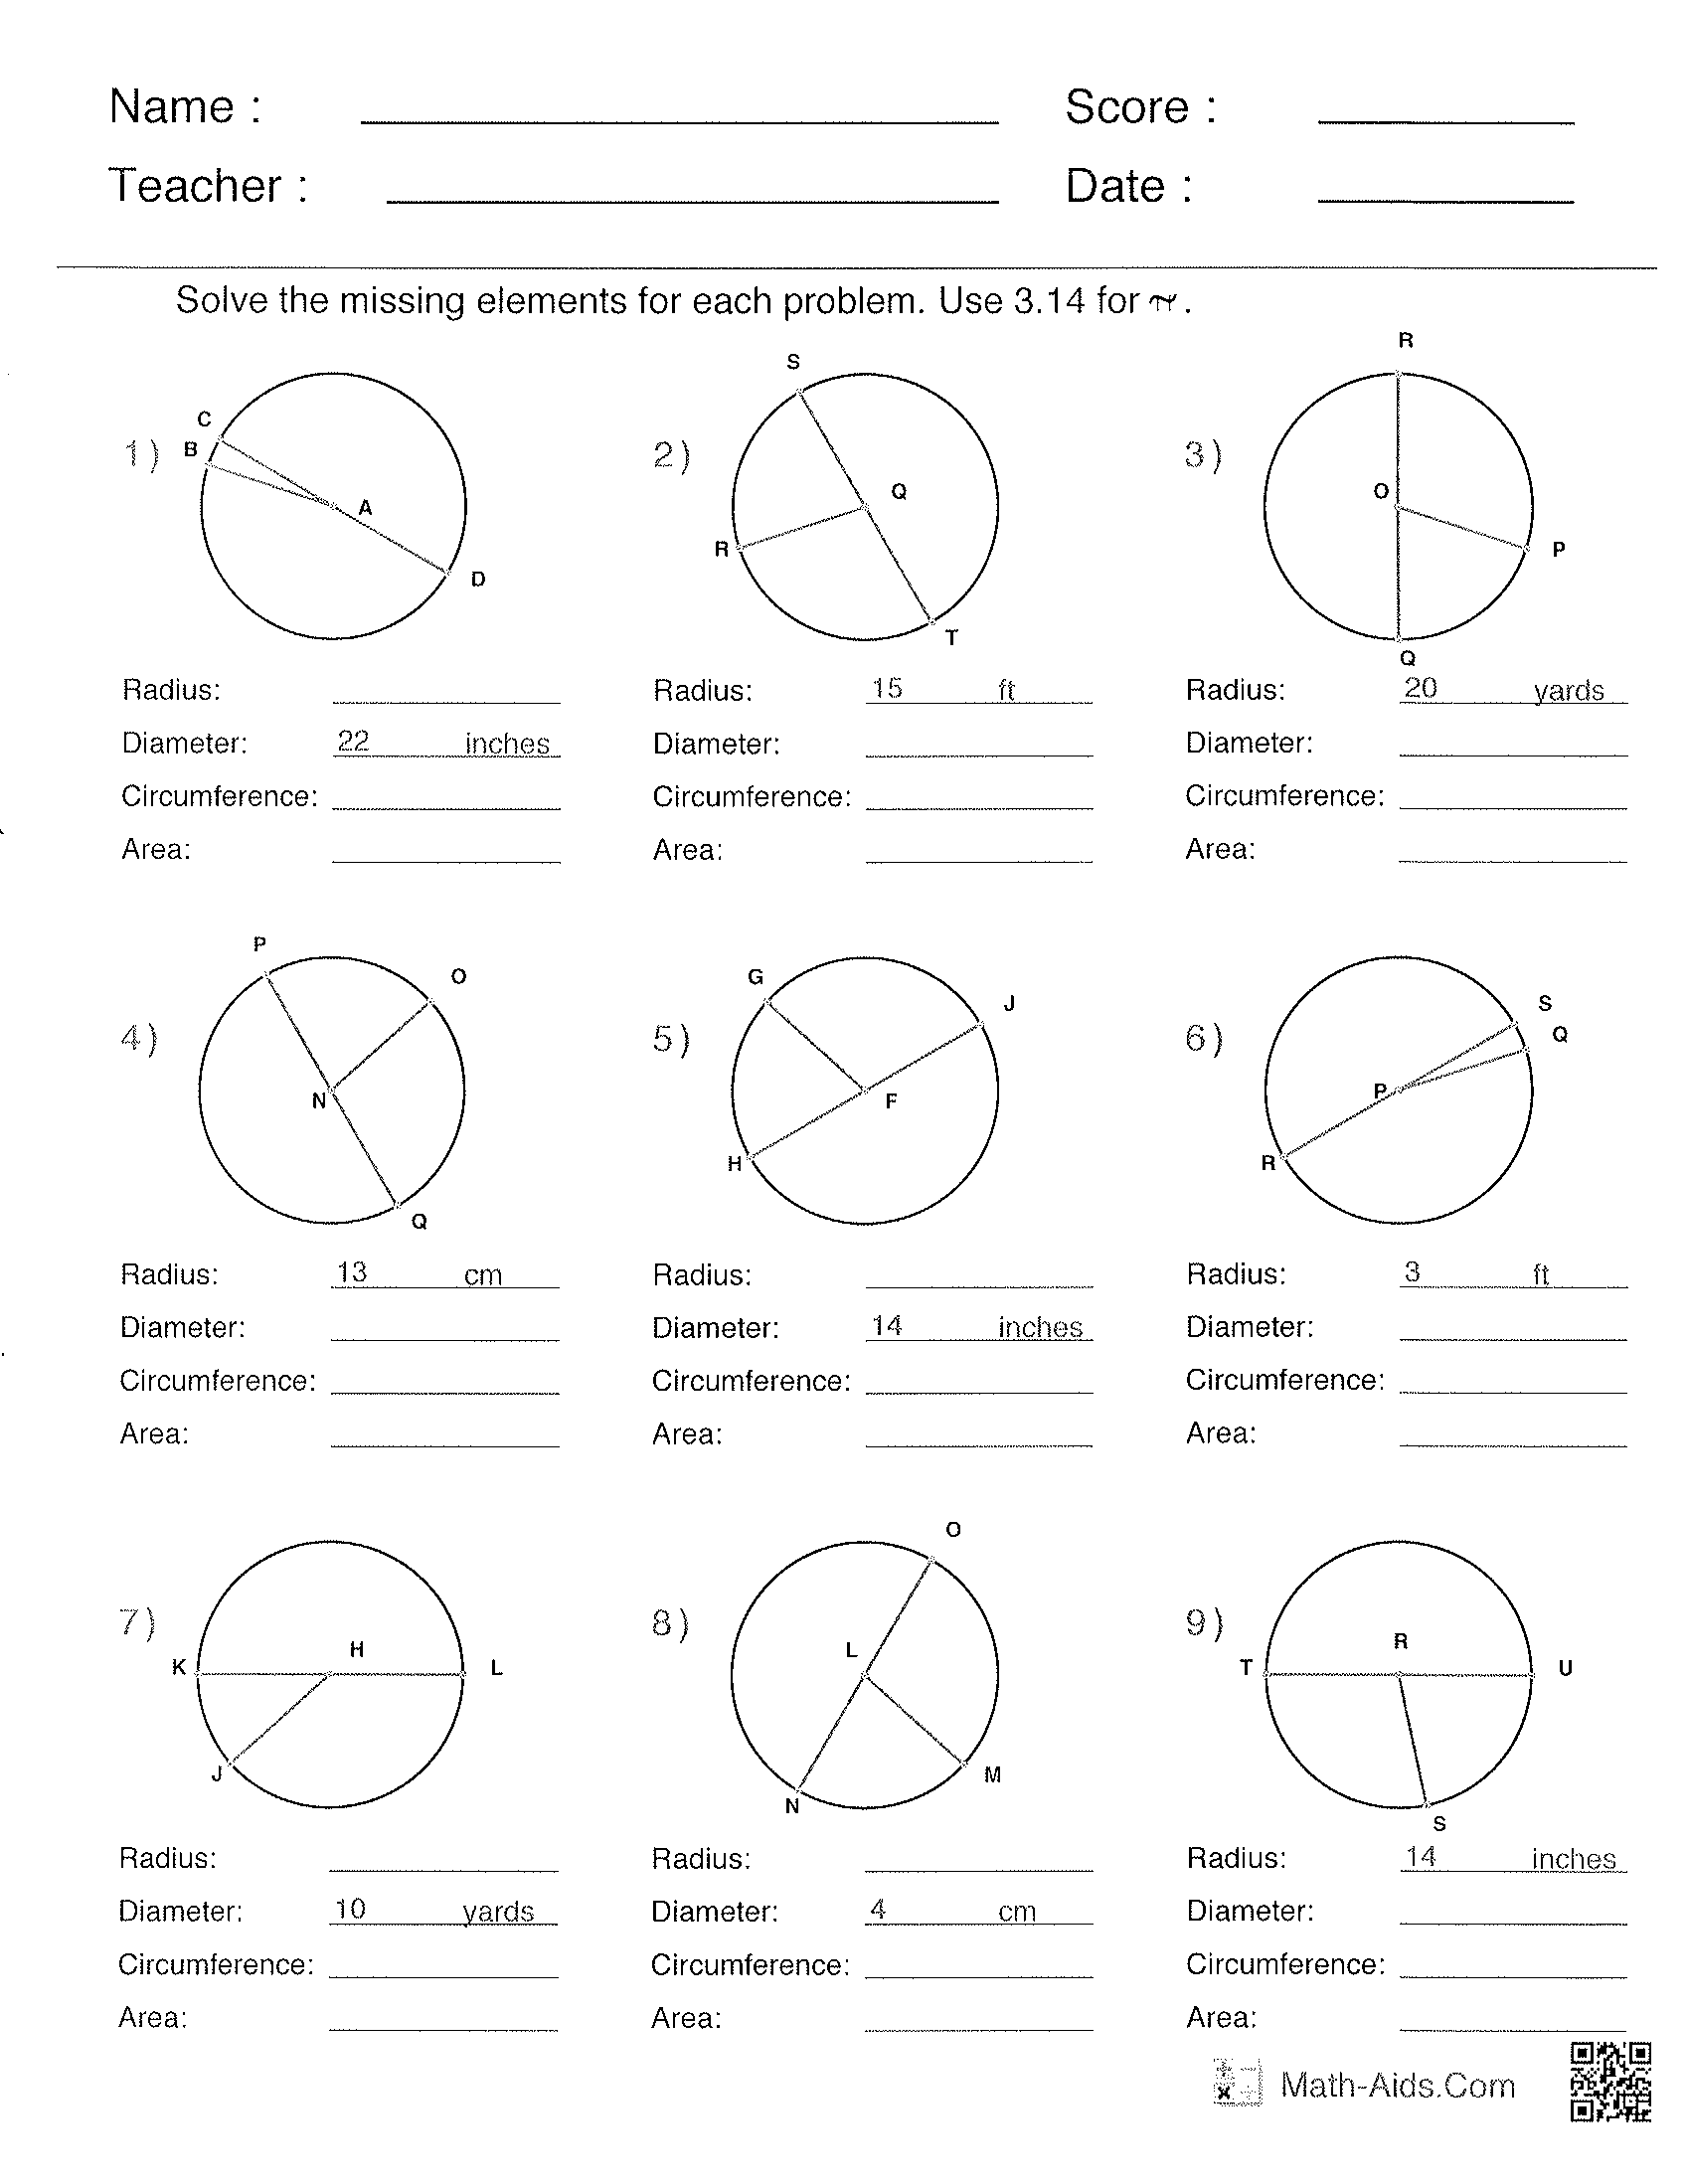 circle problem solving worksheet